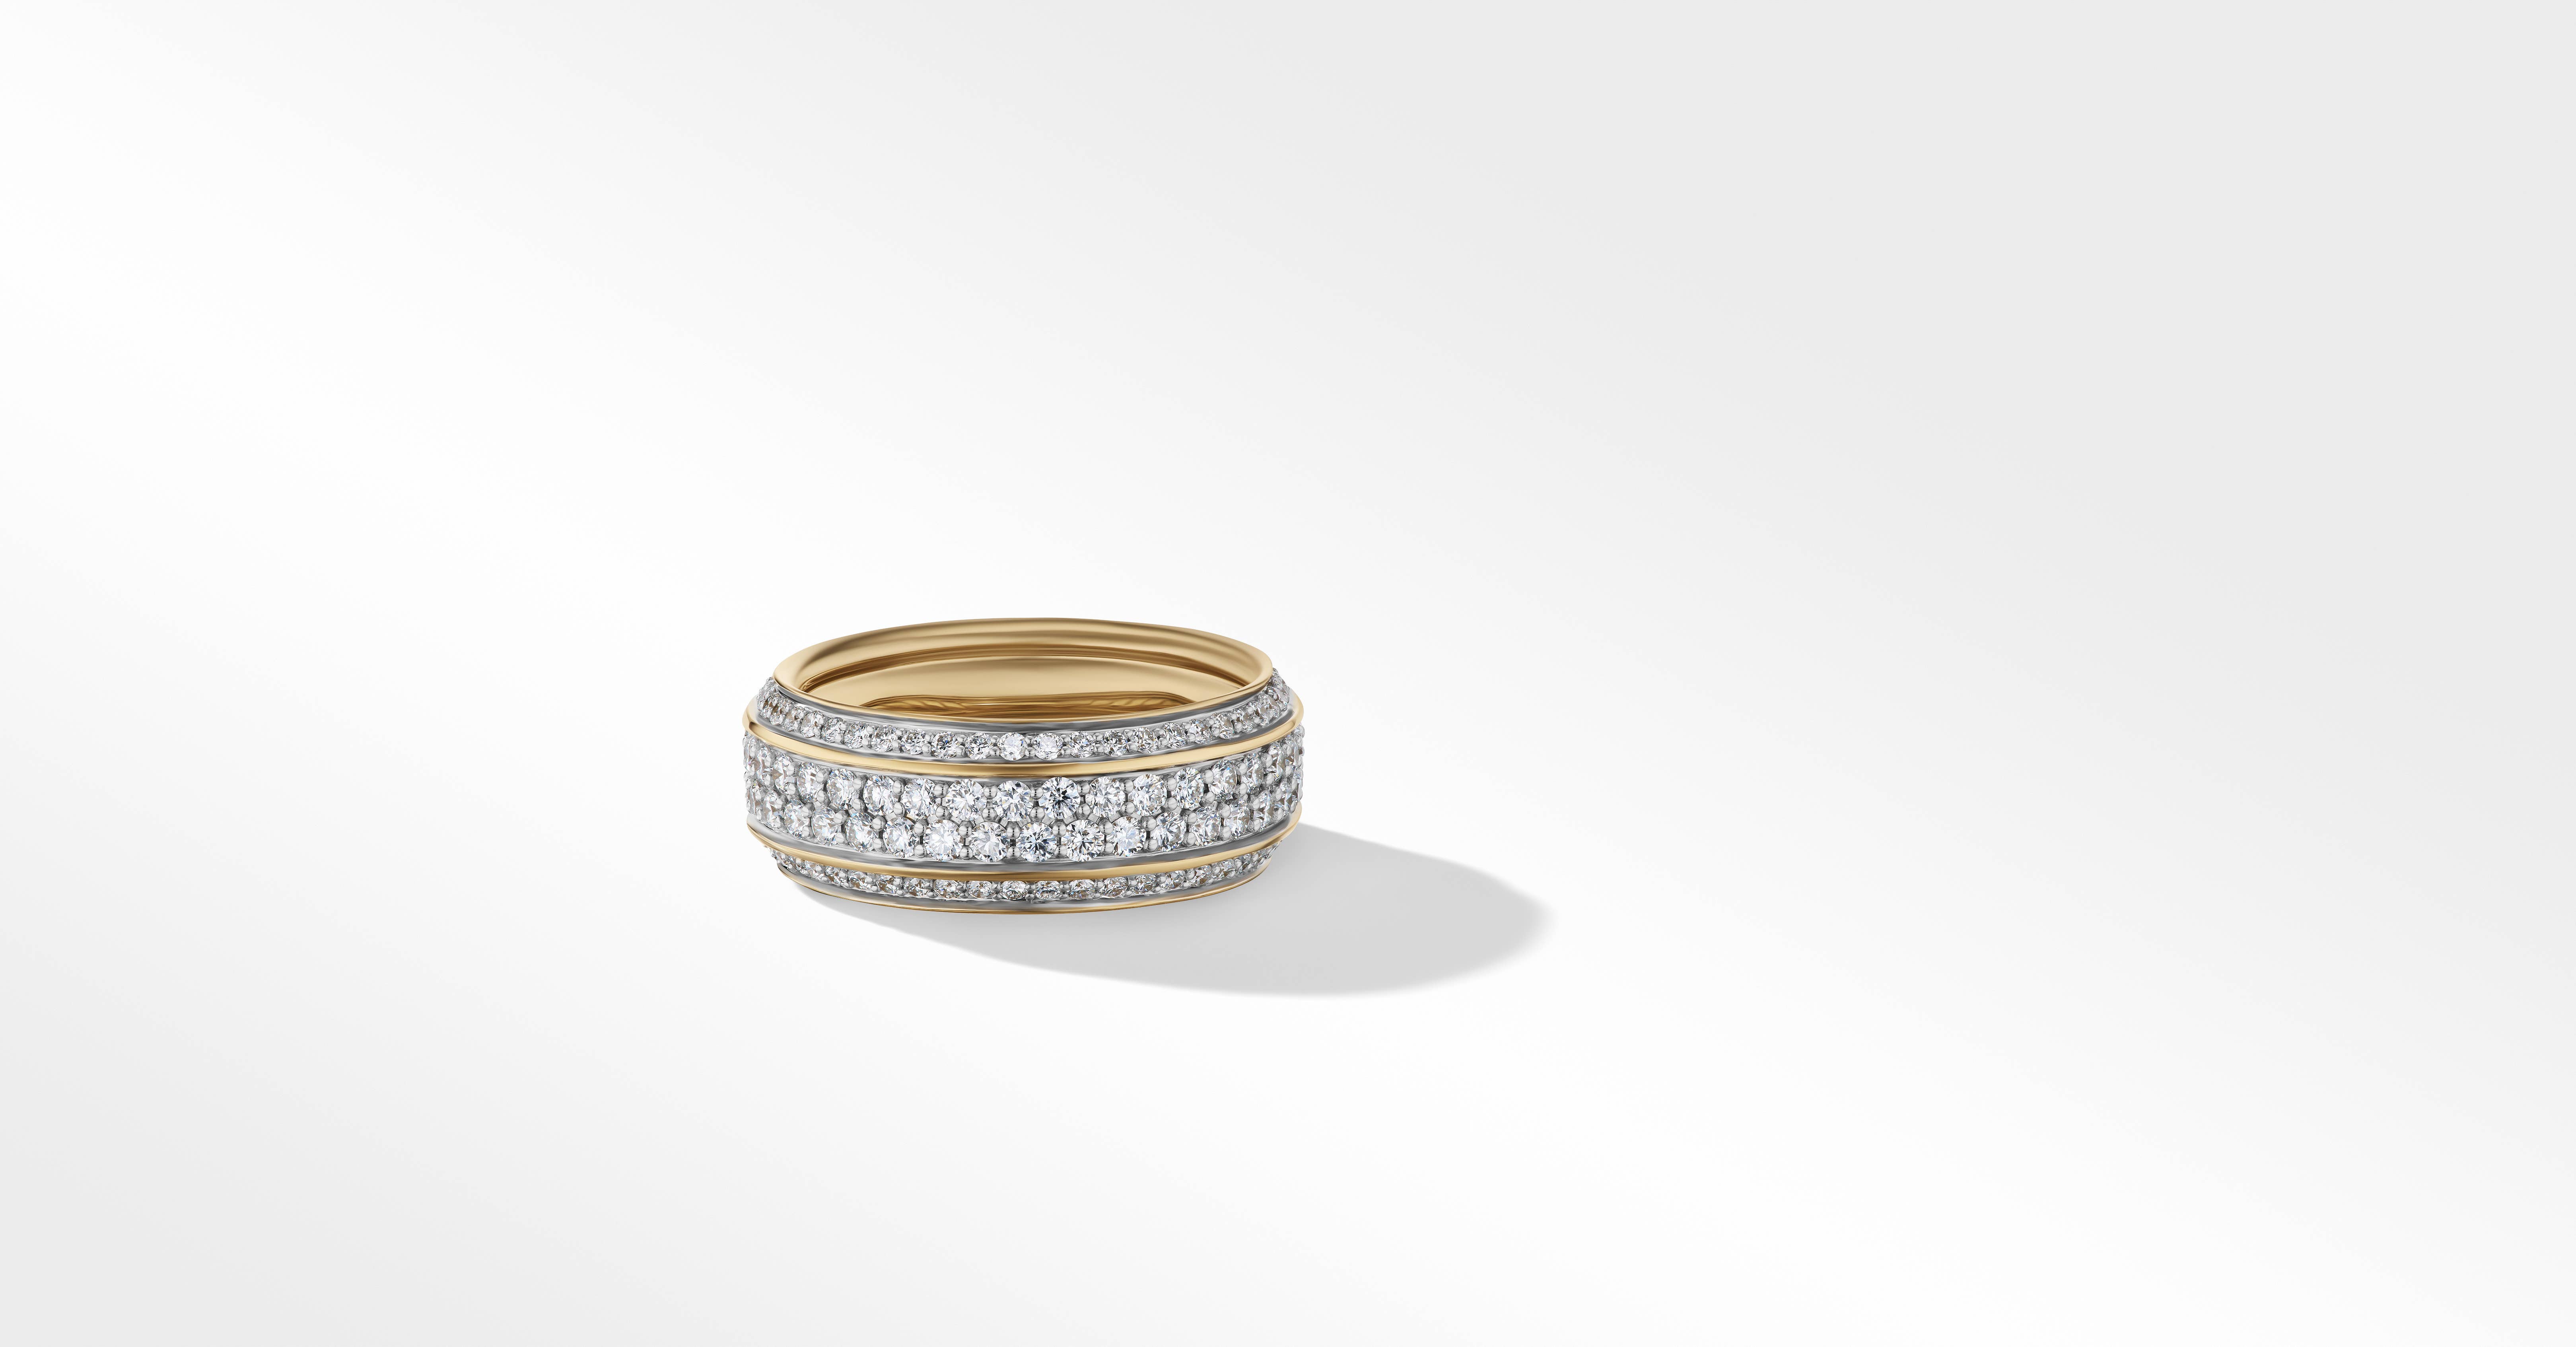 David Yurman | Streamline® Beveled Band Ring in 18K Yellow Gold with Pavé Diamonds